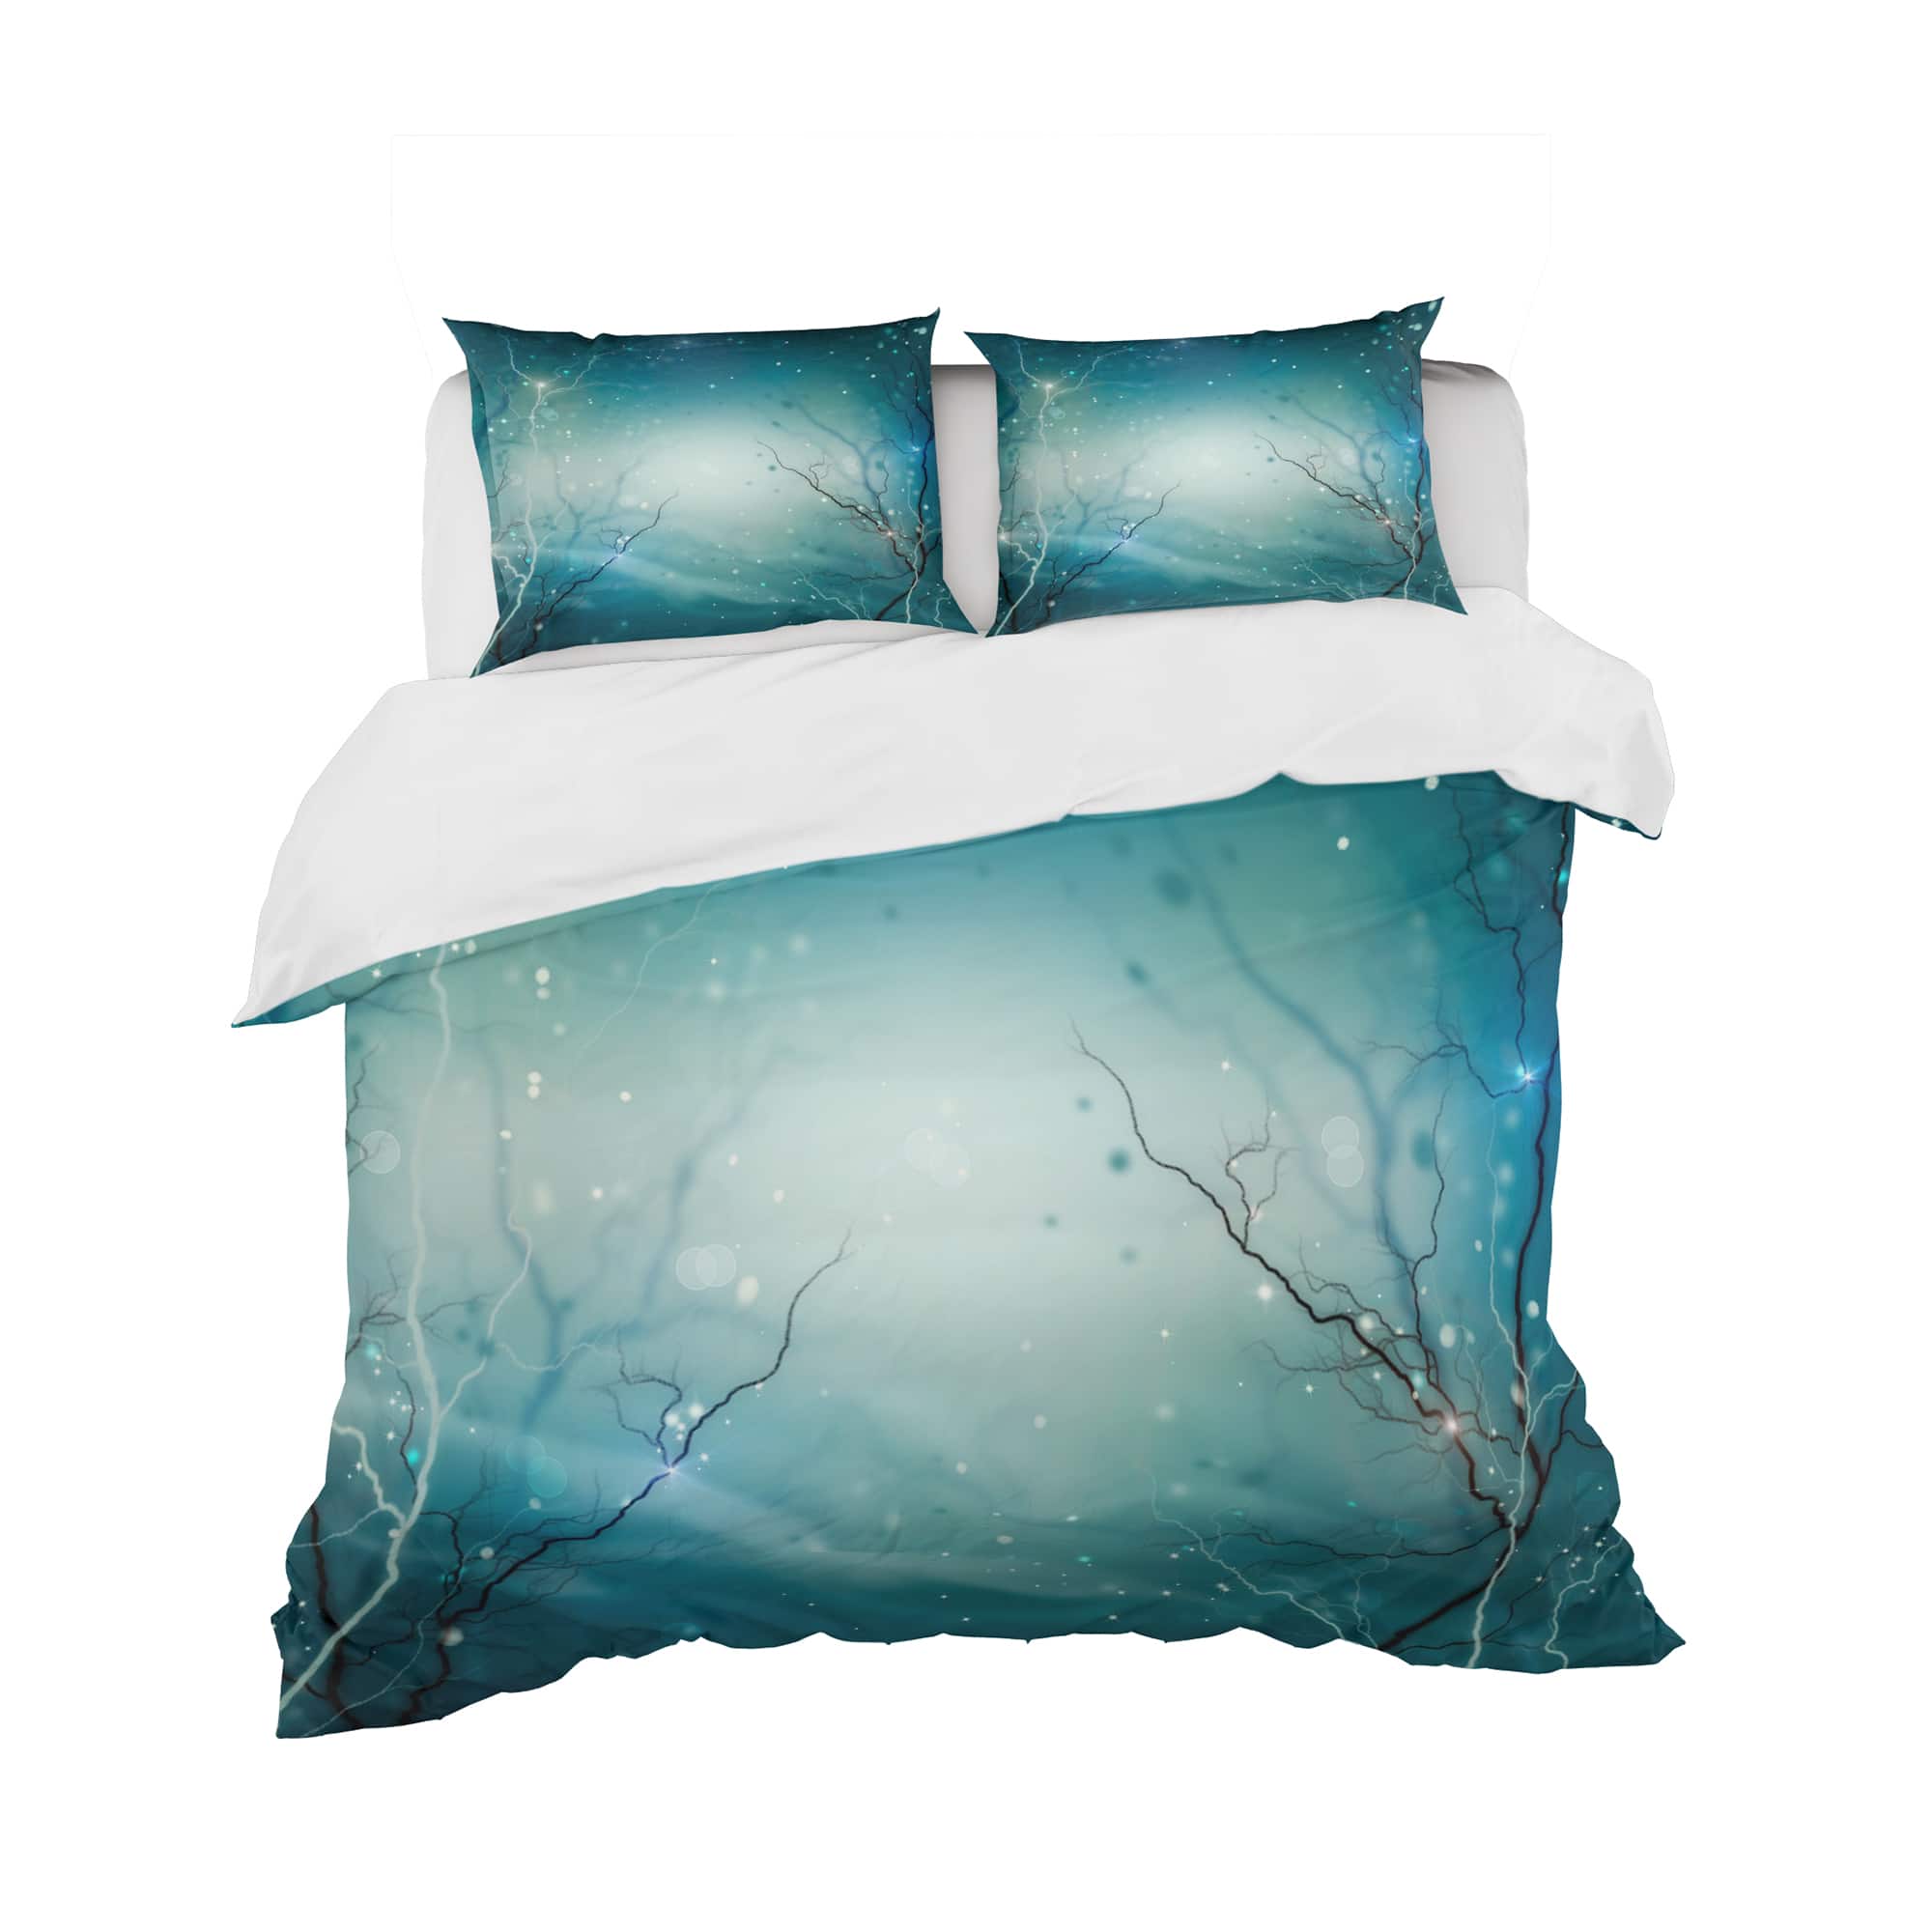 Designart &#x27;Blue Winter Fantasy Forest&#x27; Cabin &#x26; Lodge Bedding Set - Duvet Cover &#x26; Shams